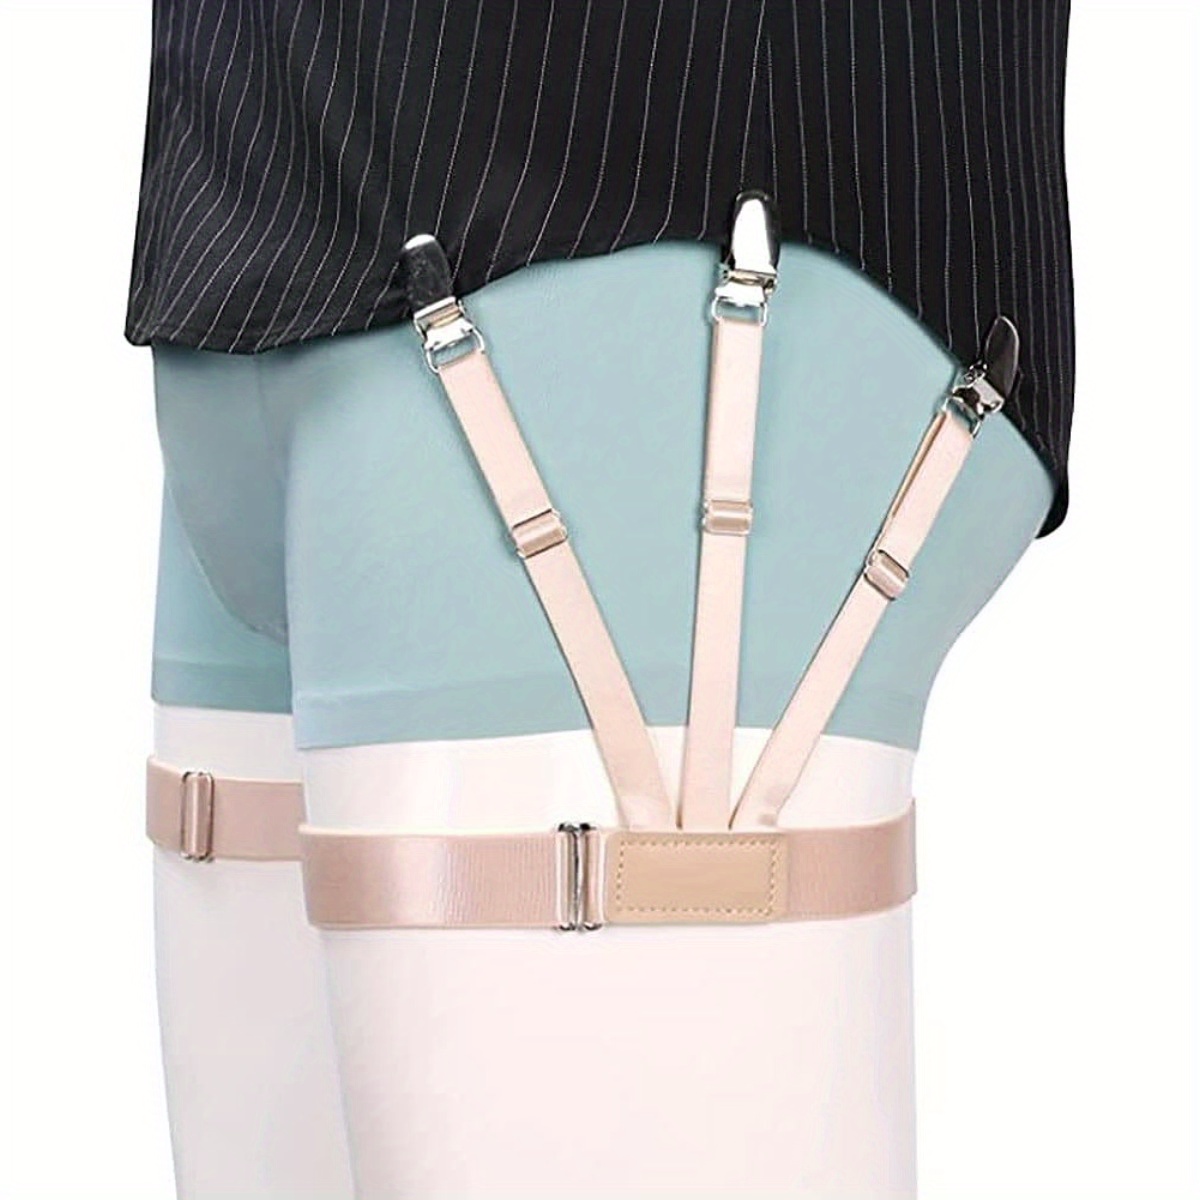 Swetopq Shirt Tuck Band,Women Belt Crop Tuck Band Adjustable Crop Tuck  Elastic Straps Versatile Flexible Shirt Tucking Sewing Accessories :  : Home & Kitchen